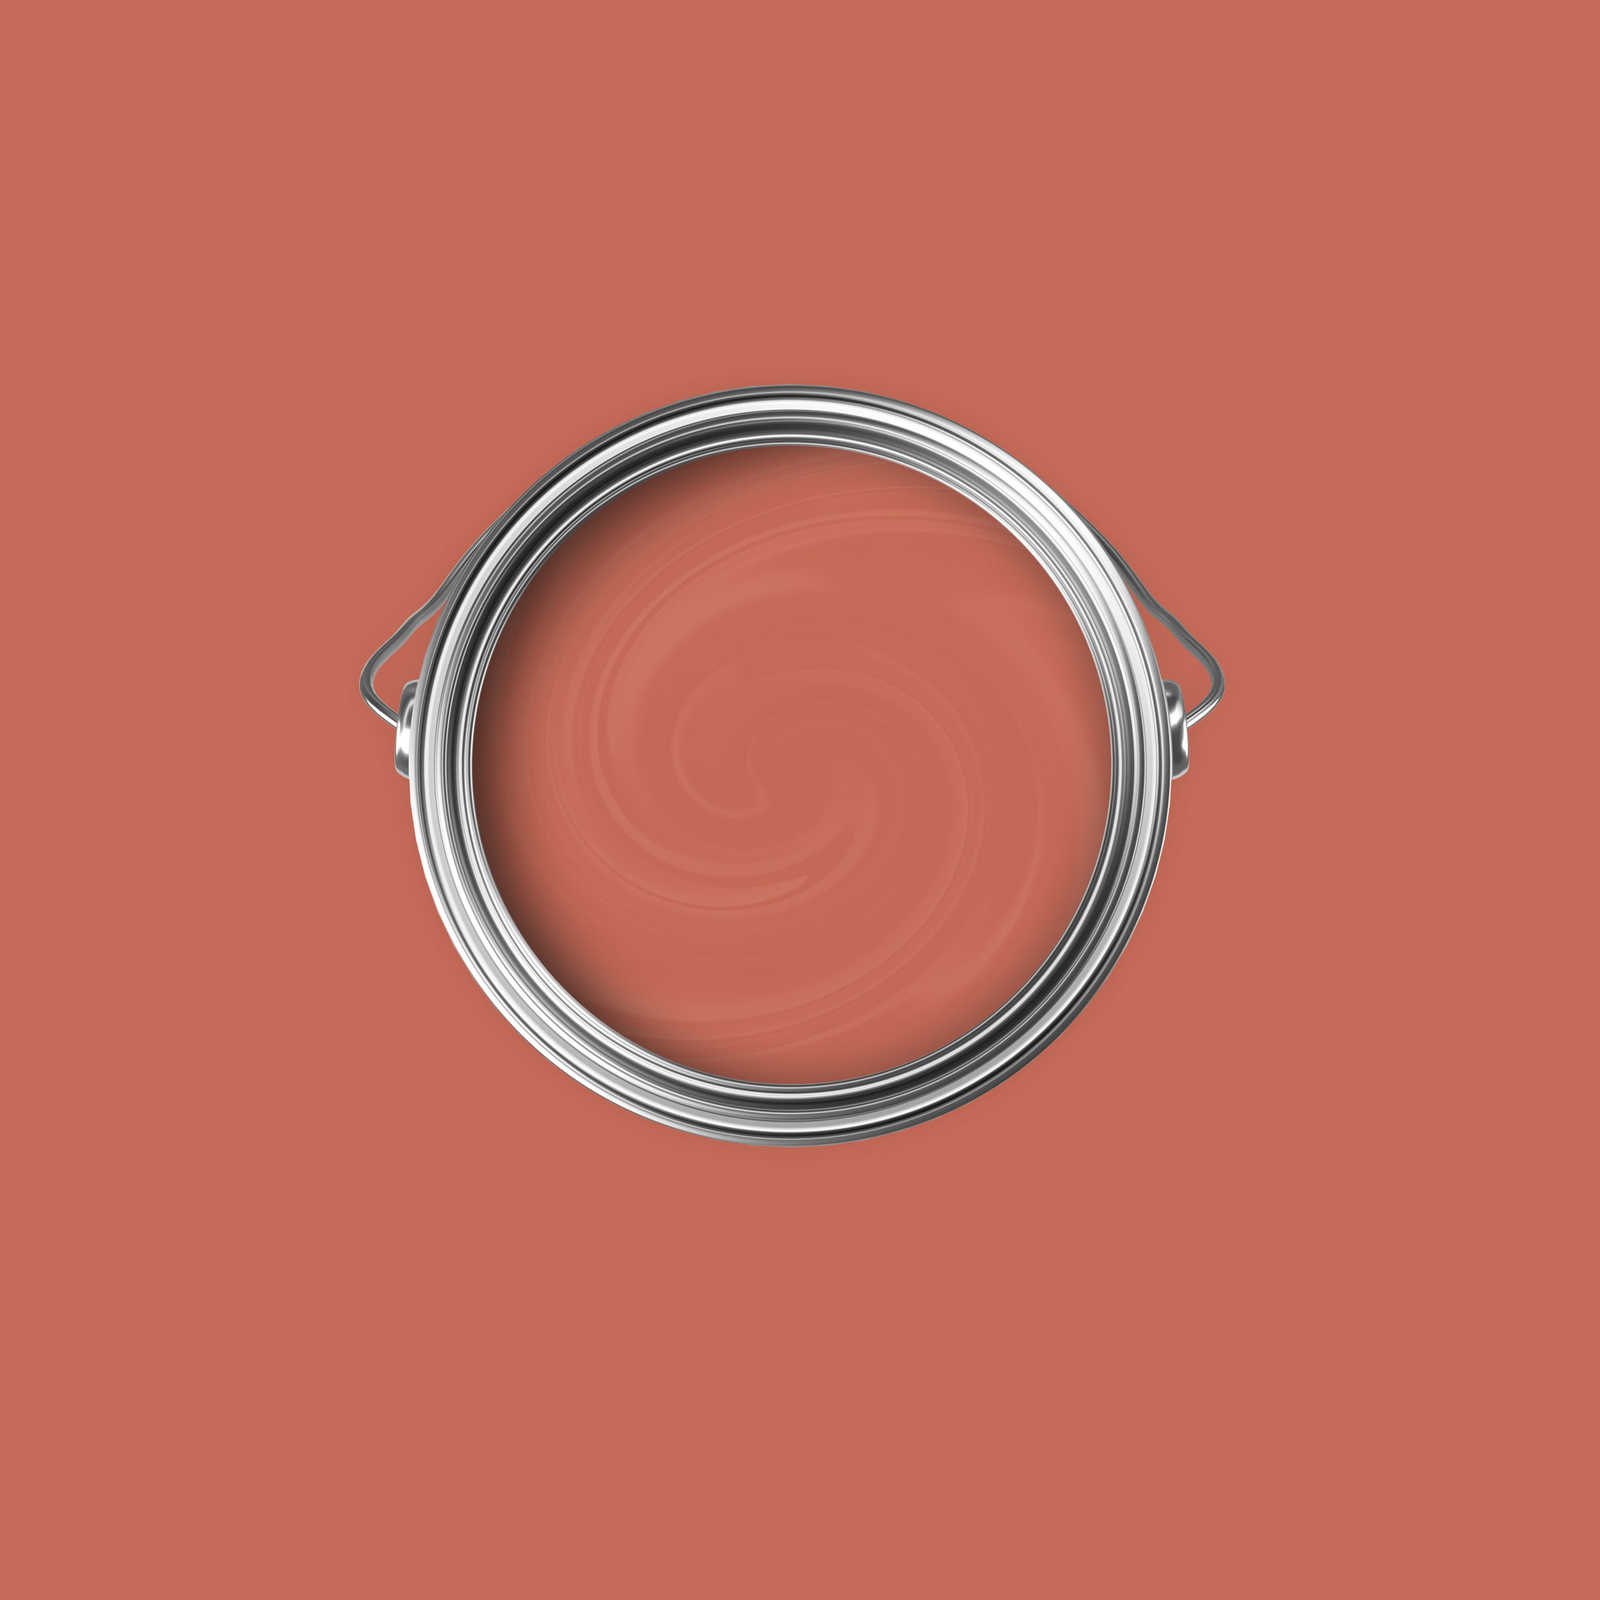             Premium Wandfarbe angenehmes Blutorange »Pretty Peach« NW907 – 2,5 Liter
        